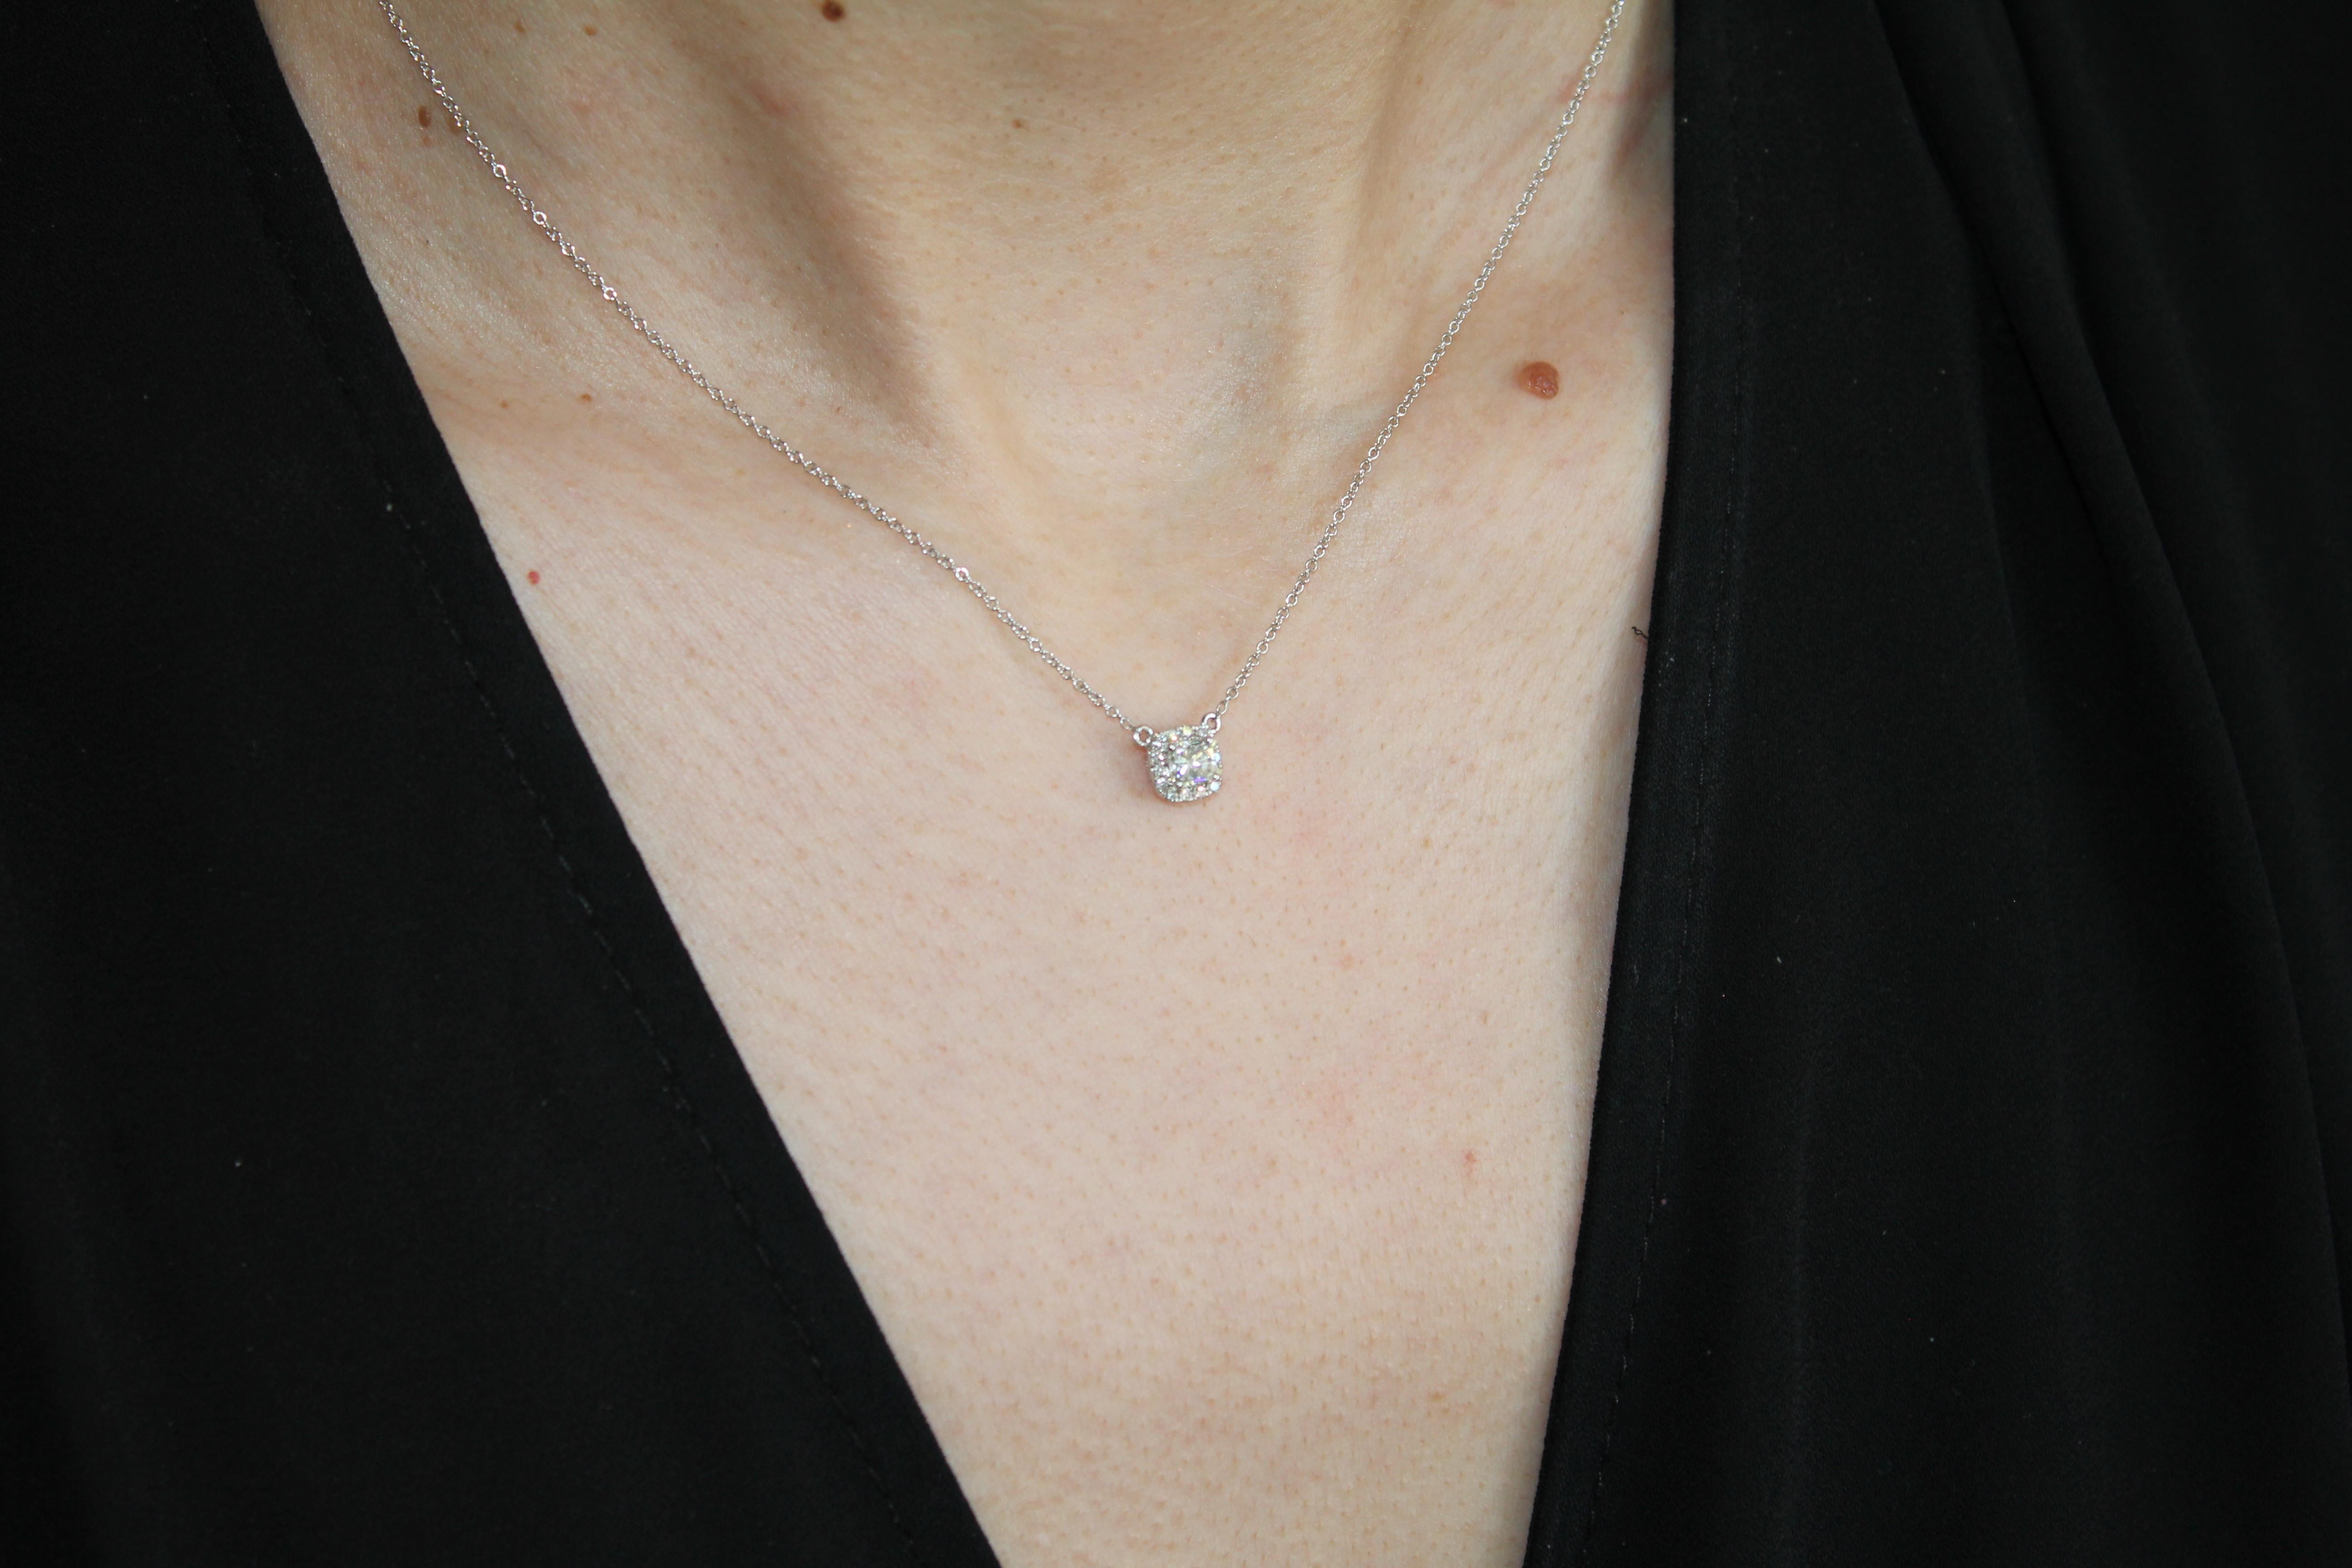 Women's or Men's Halo Pave Cushion Cut Diamond Pendant 18 Karat White Gold Necklace Chain Charm For Sale